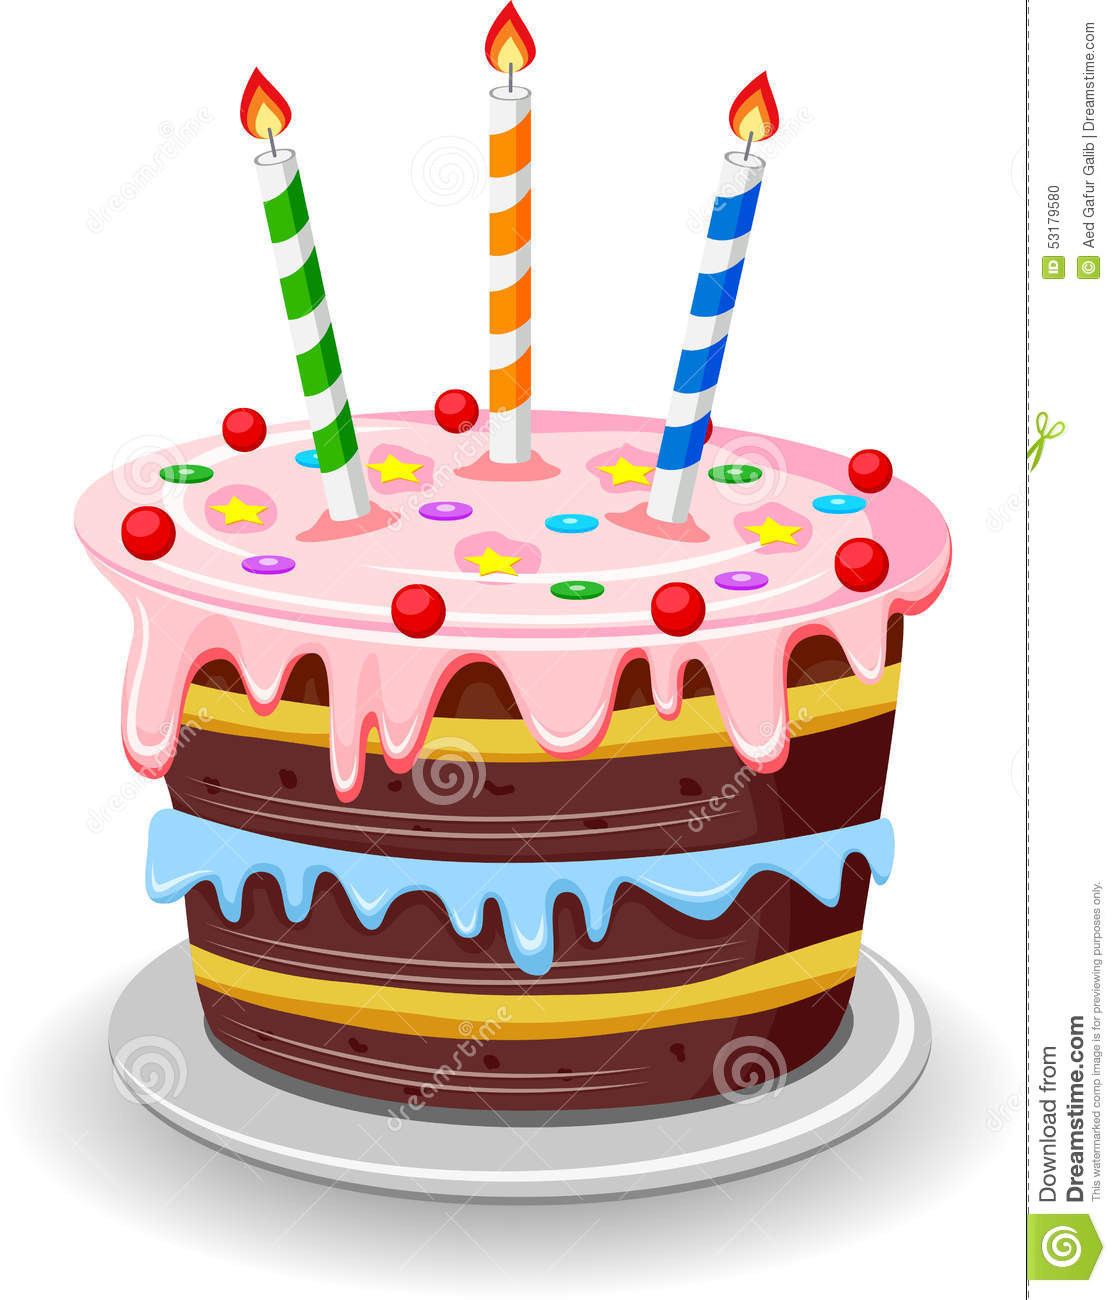 Birthday Cake Illustration
 Birthday cake stock vector Illustration of fancy candle